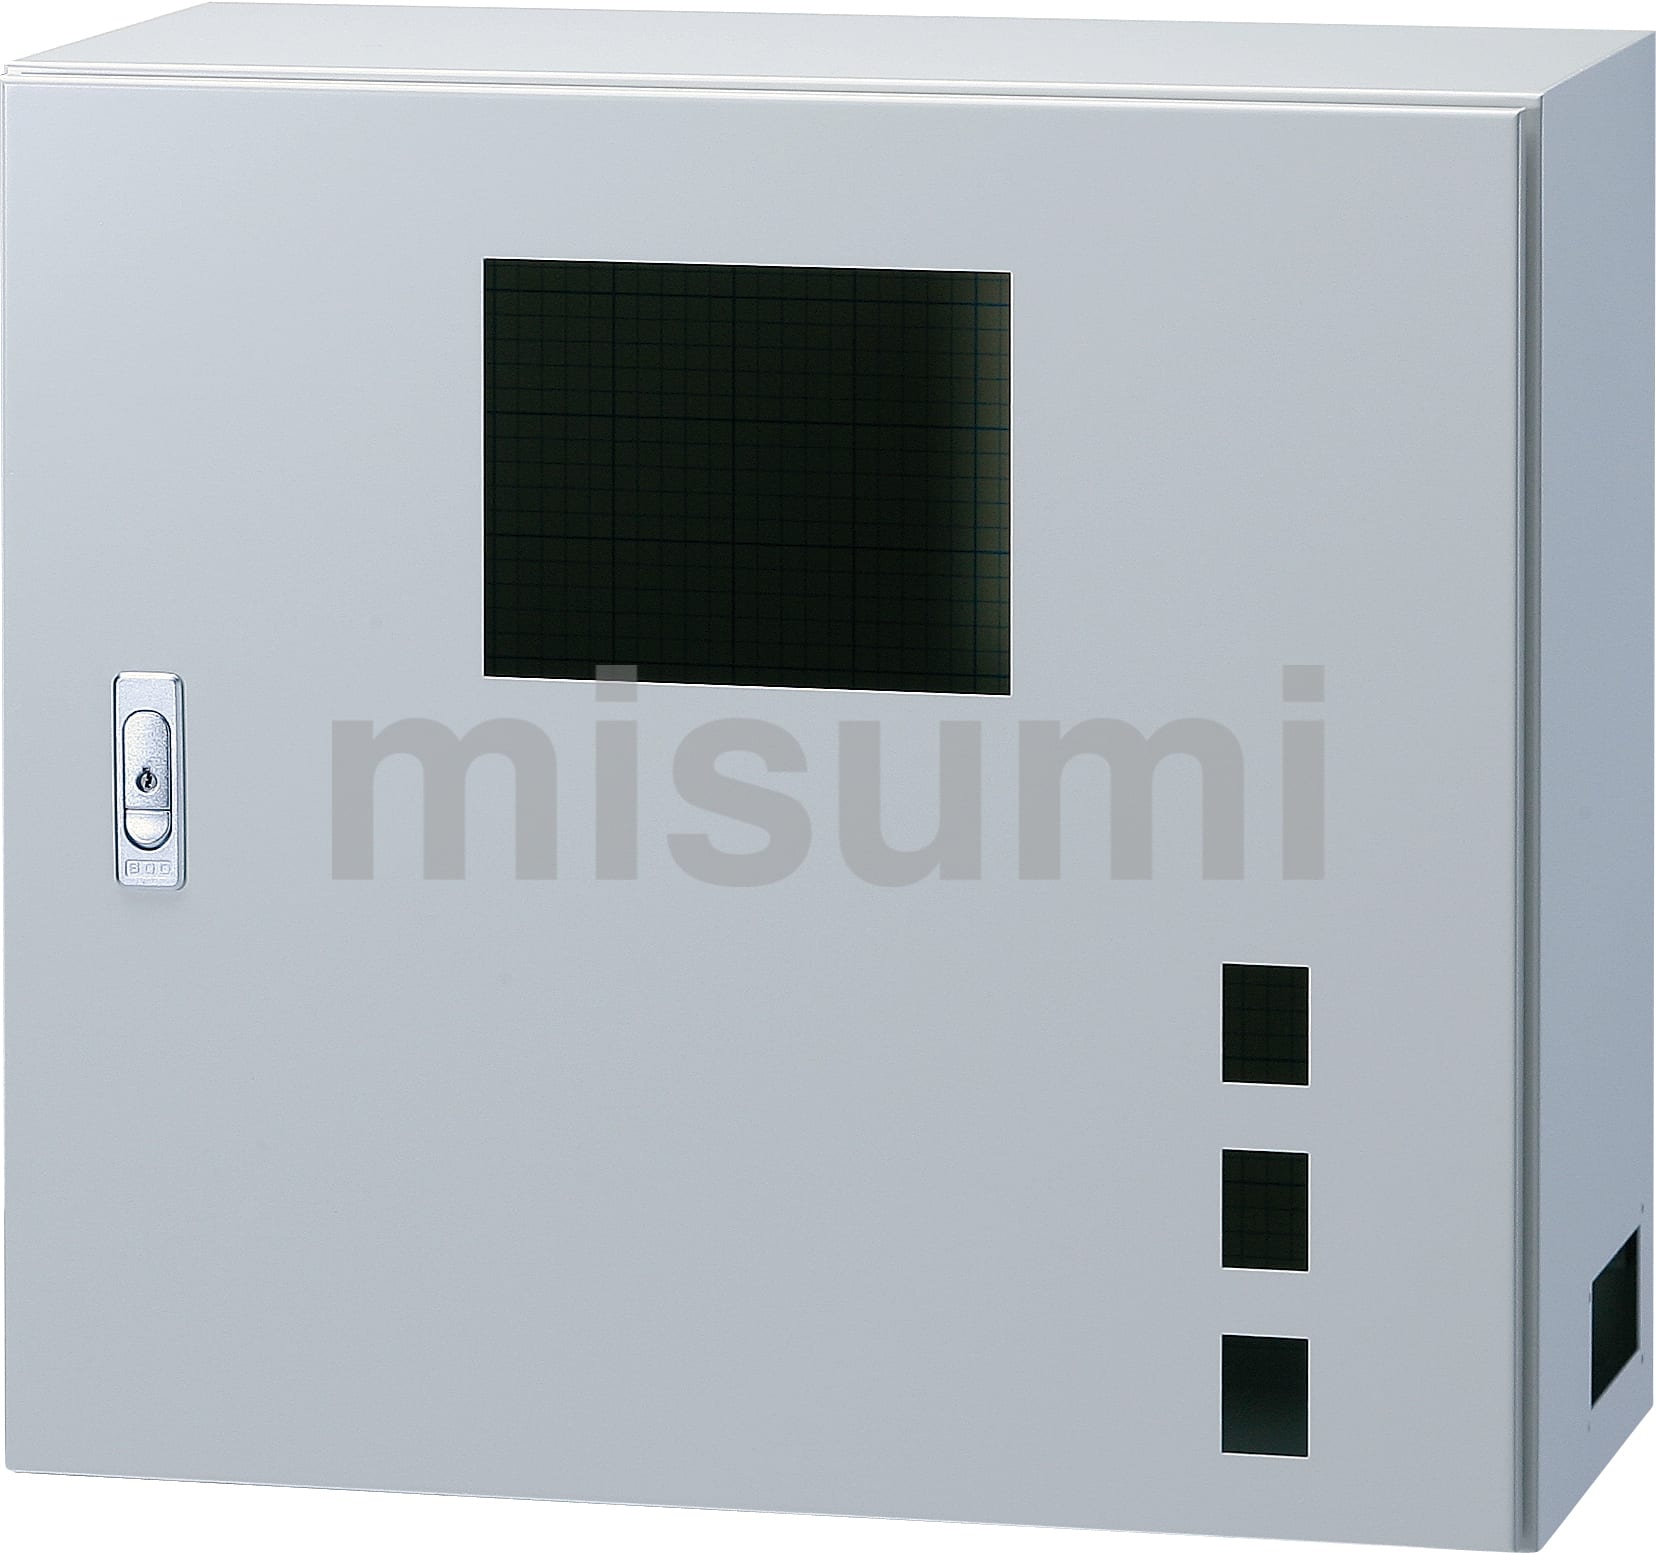 E35-1216A-F E-A-F 自立制御盤キャビネット・基台付・鉄製基板なし 日東工業 MISUMI(ミスミ)